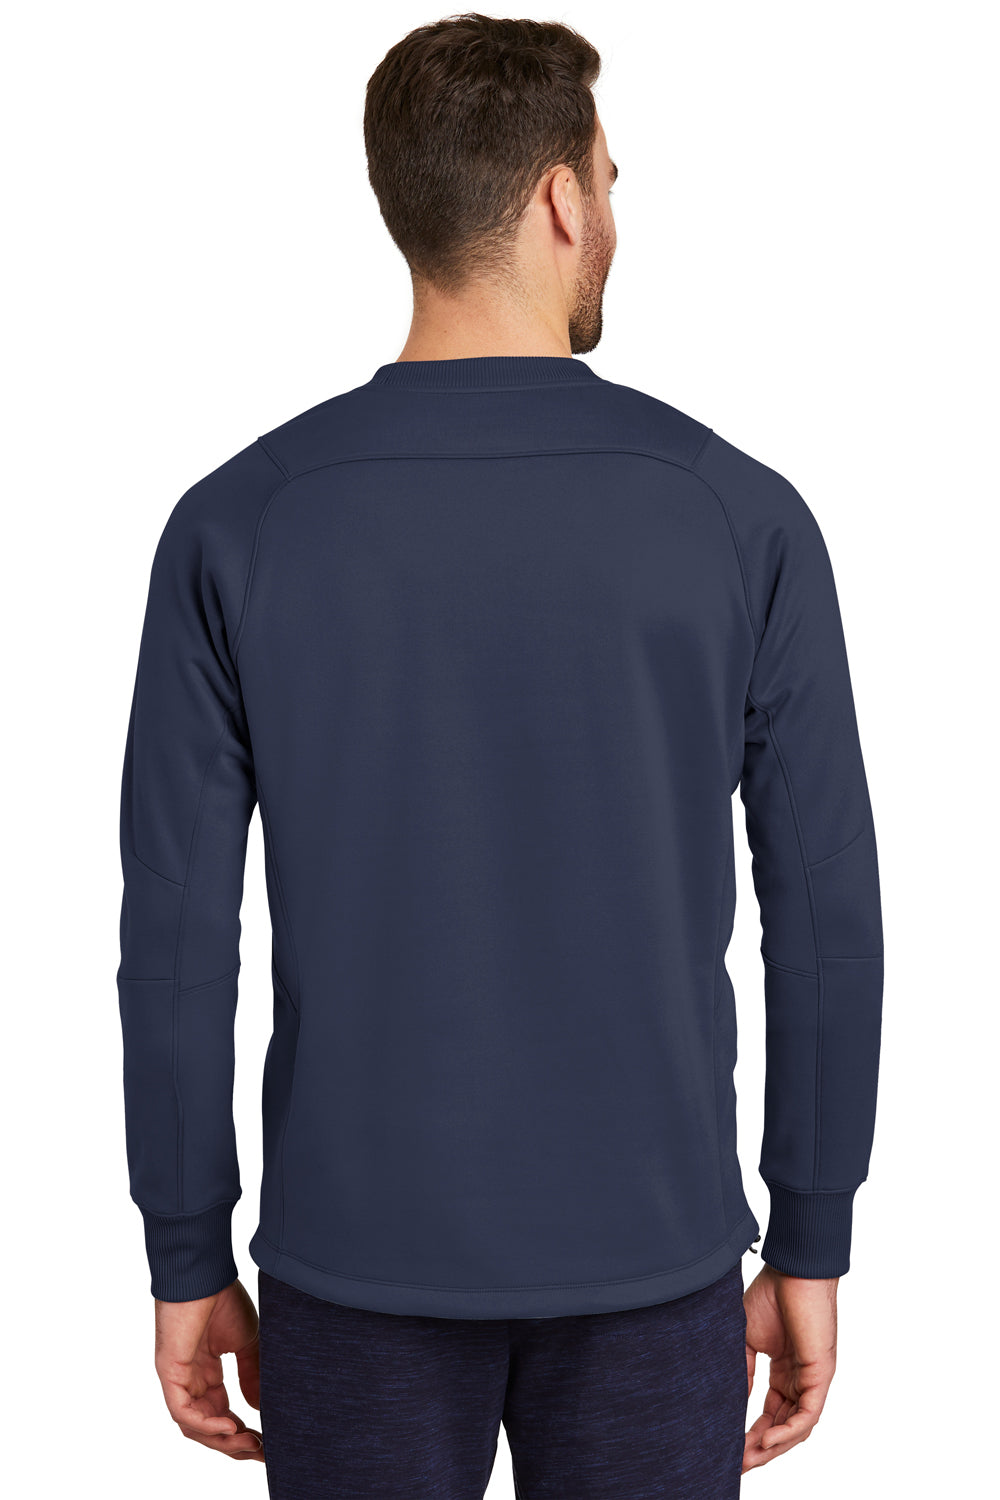 New Era NEA521 Mens Venue Moisture Wicking Fleece Crewneck Sweatshirt Navy Blue Back